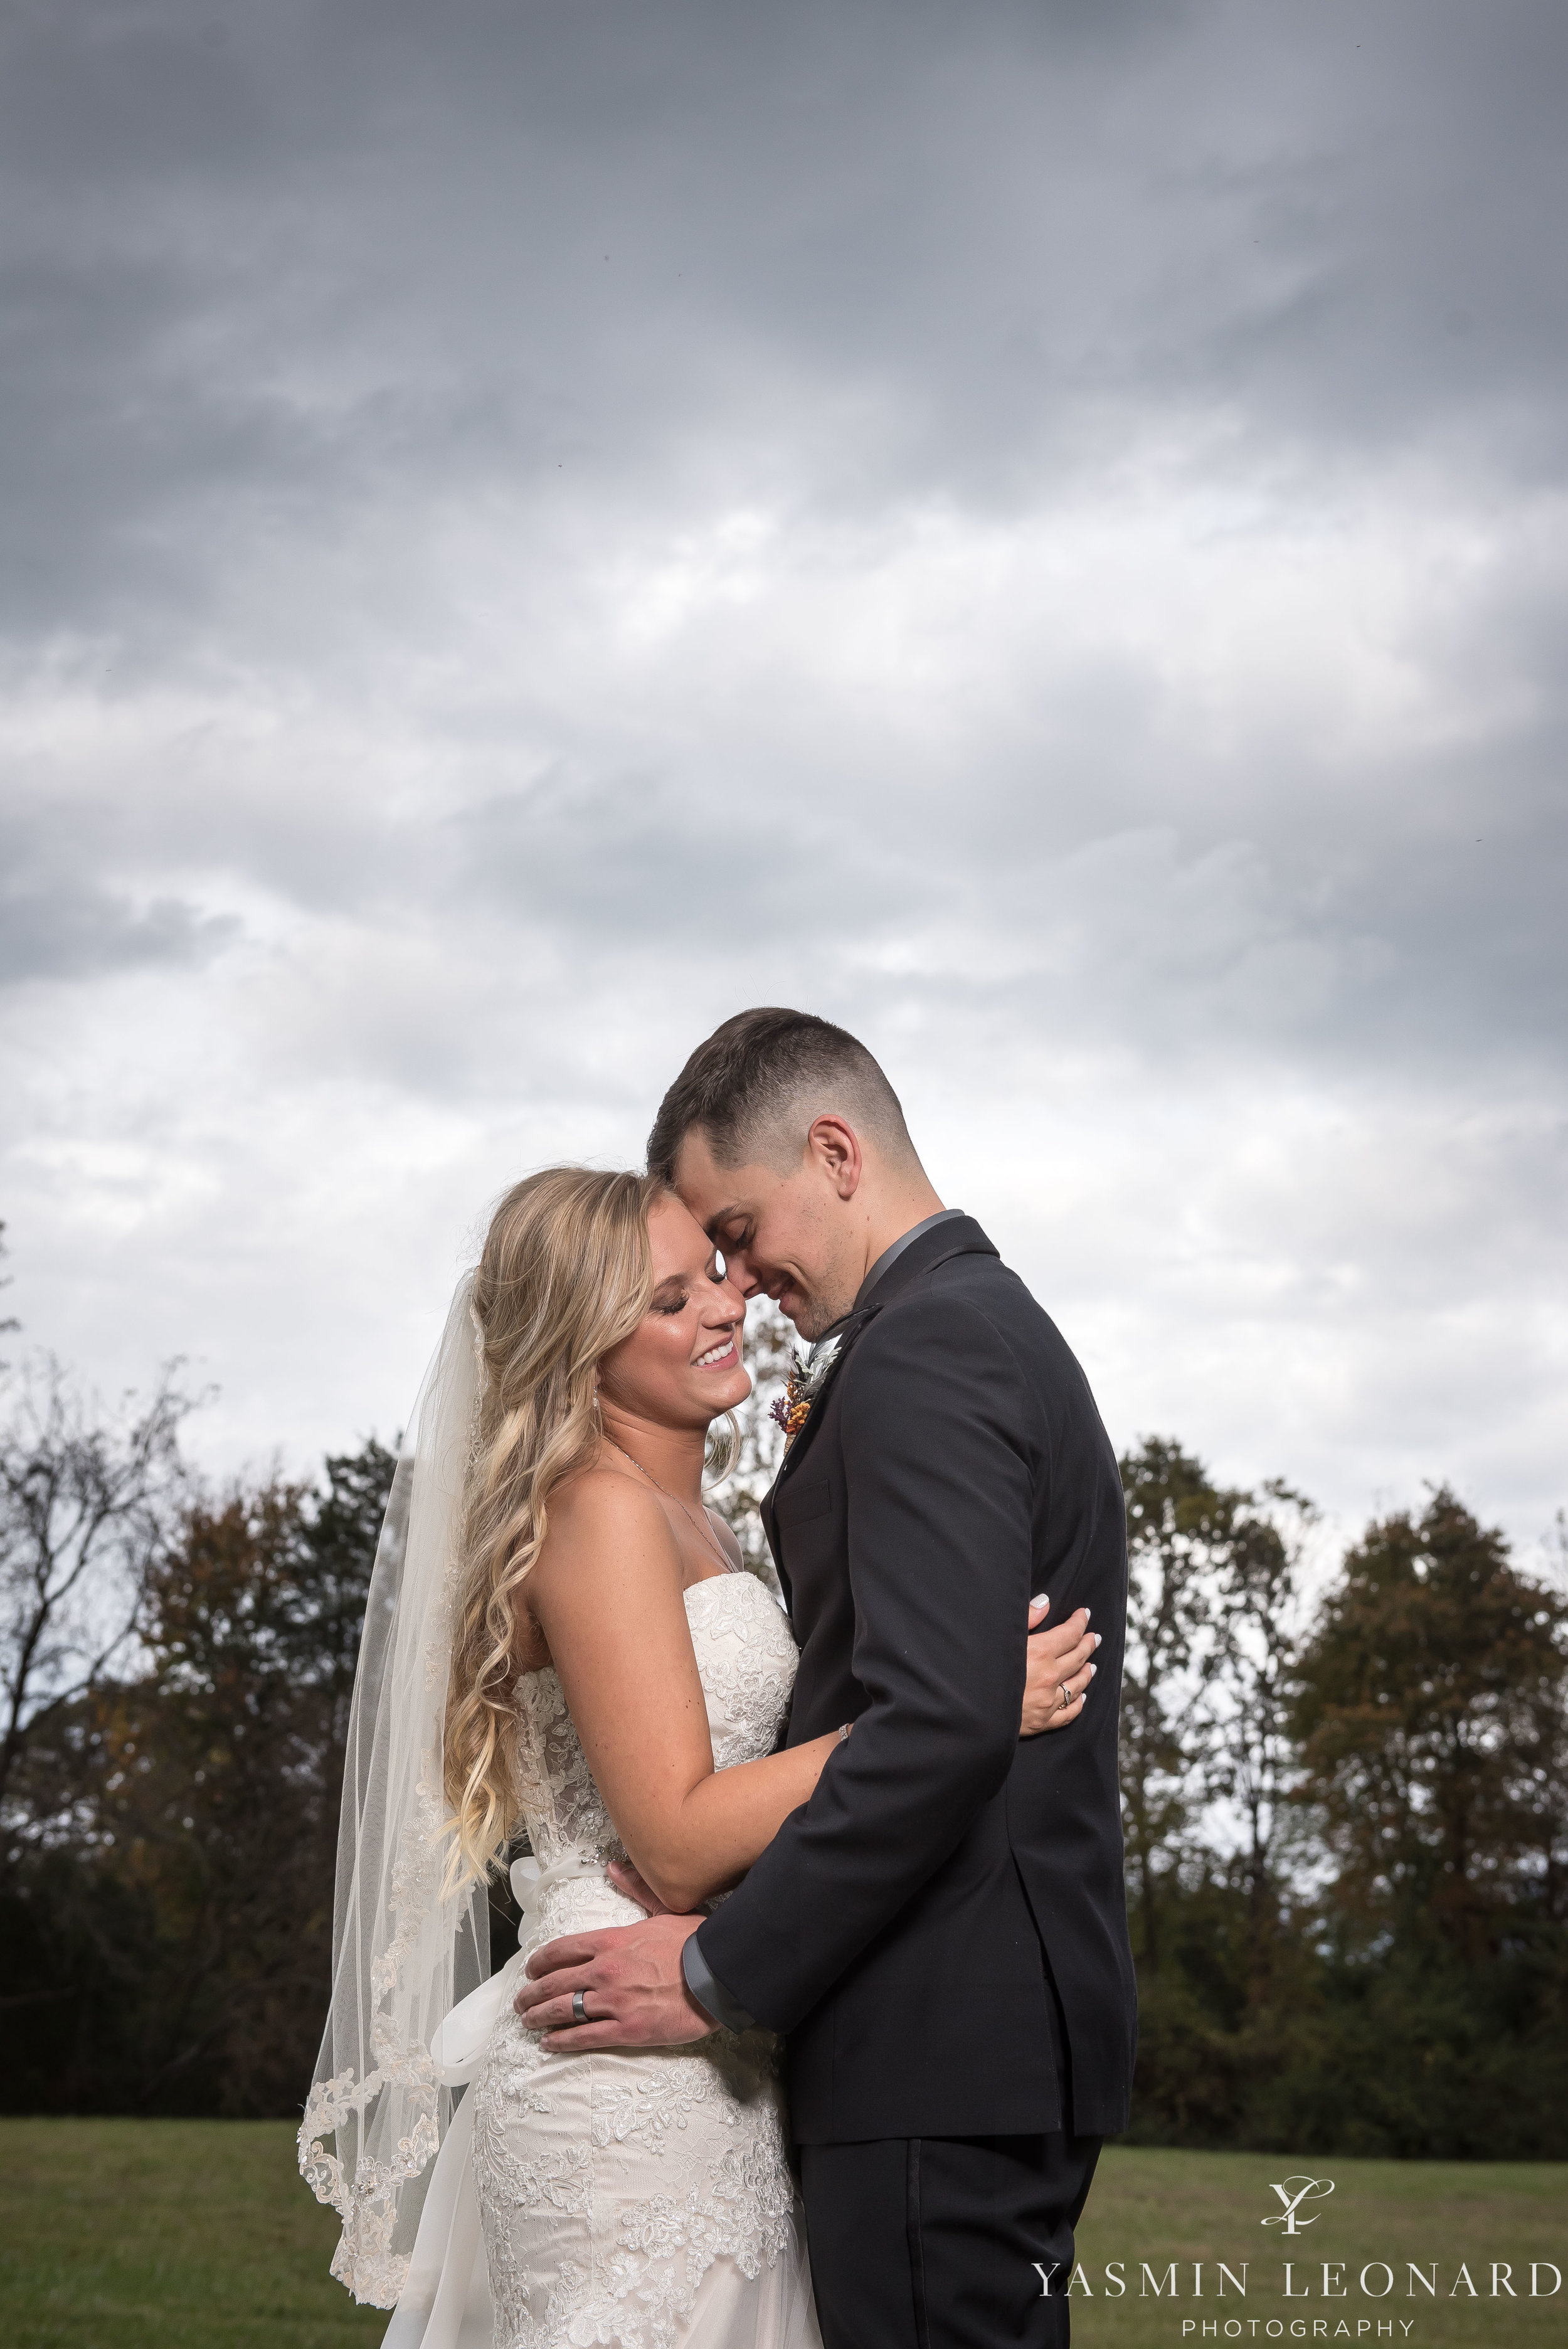 NC Wedding Photographer - Yasmin Leonard Photography - Summerfield Farms - High Point Wedding Photographer - Labri at Linwood - Barns in North Carolina - NC Barn Wedding-62.jpg